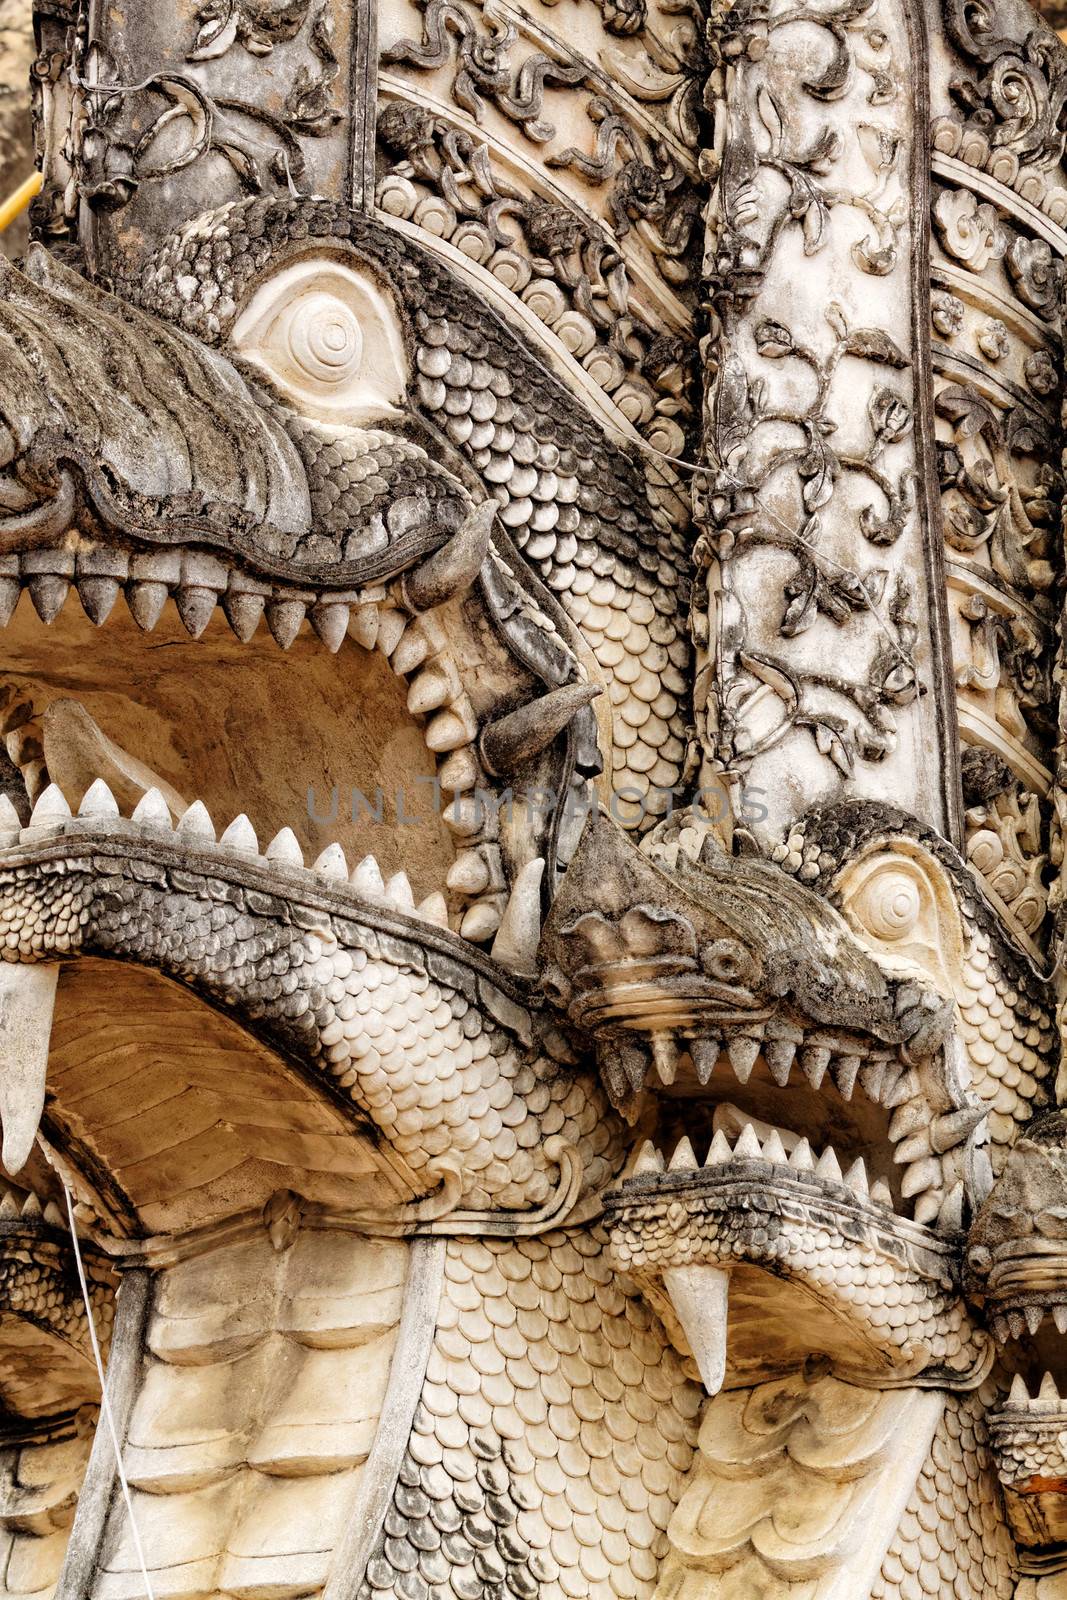 dragon sculpture in Thailand temple by cozyta